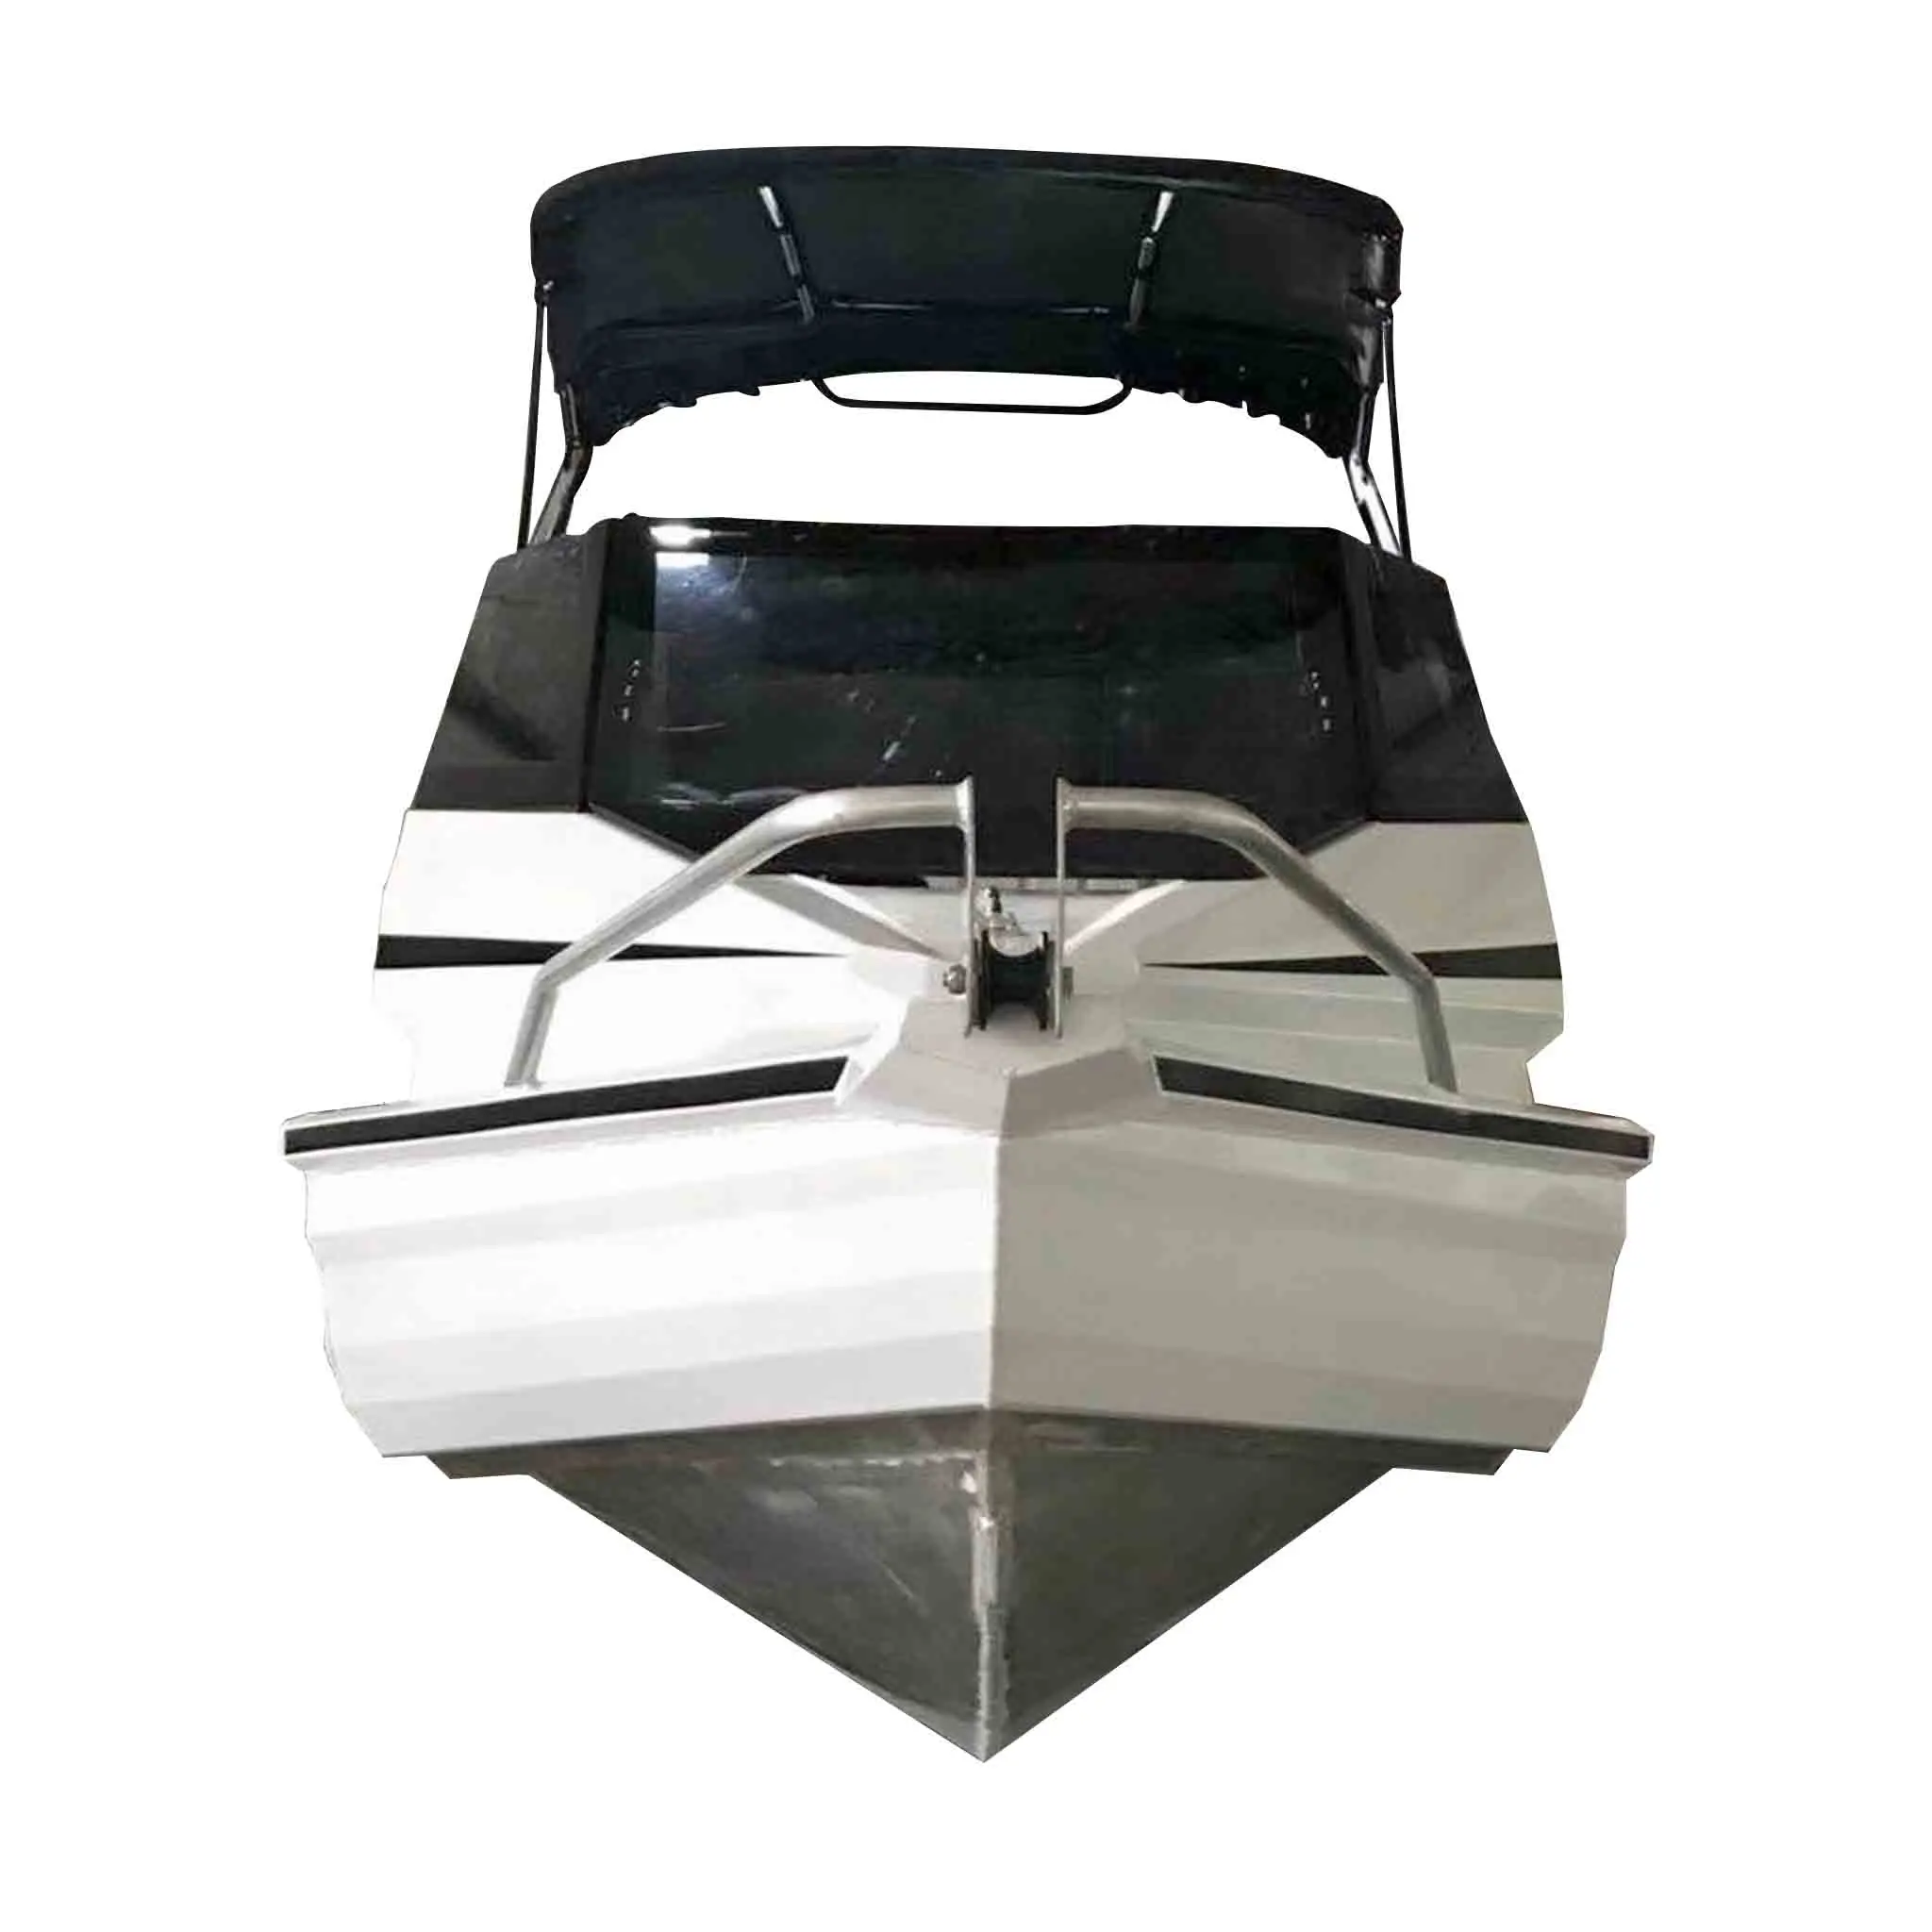 5.85M supercab fisher aluminum pontoon cuddy cabin fishing boat. 